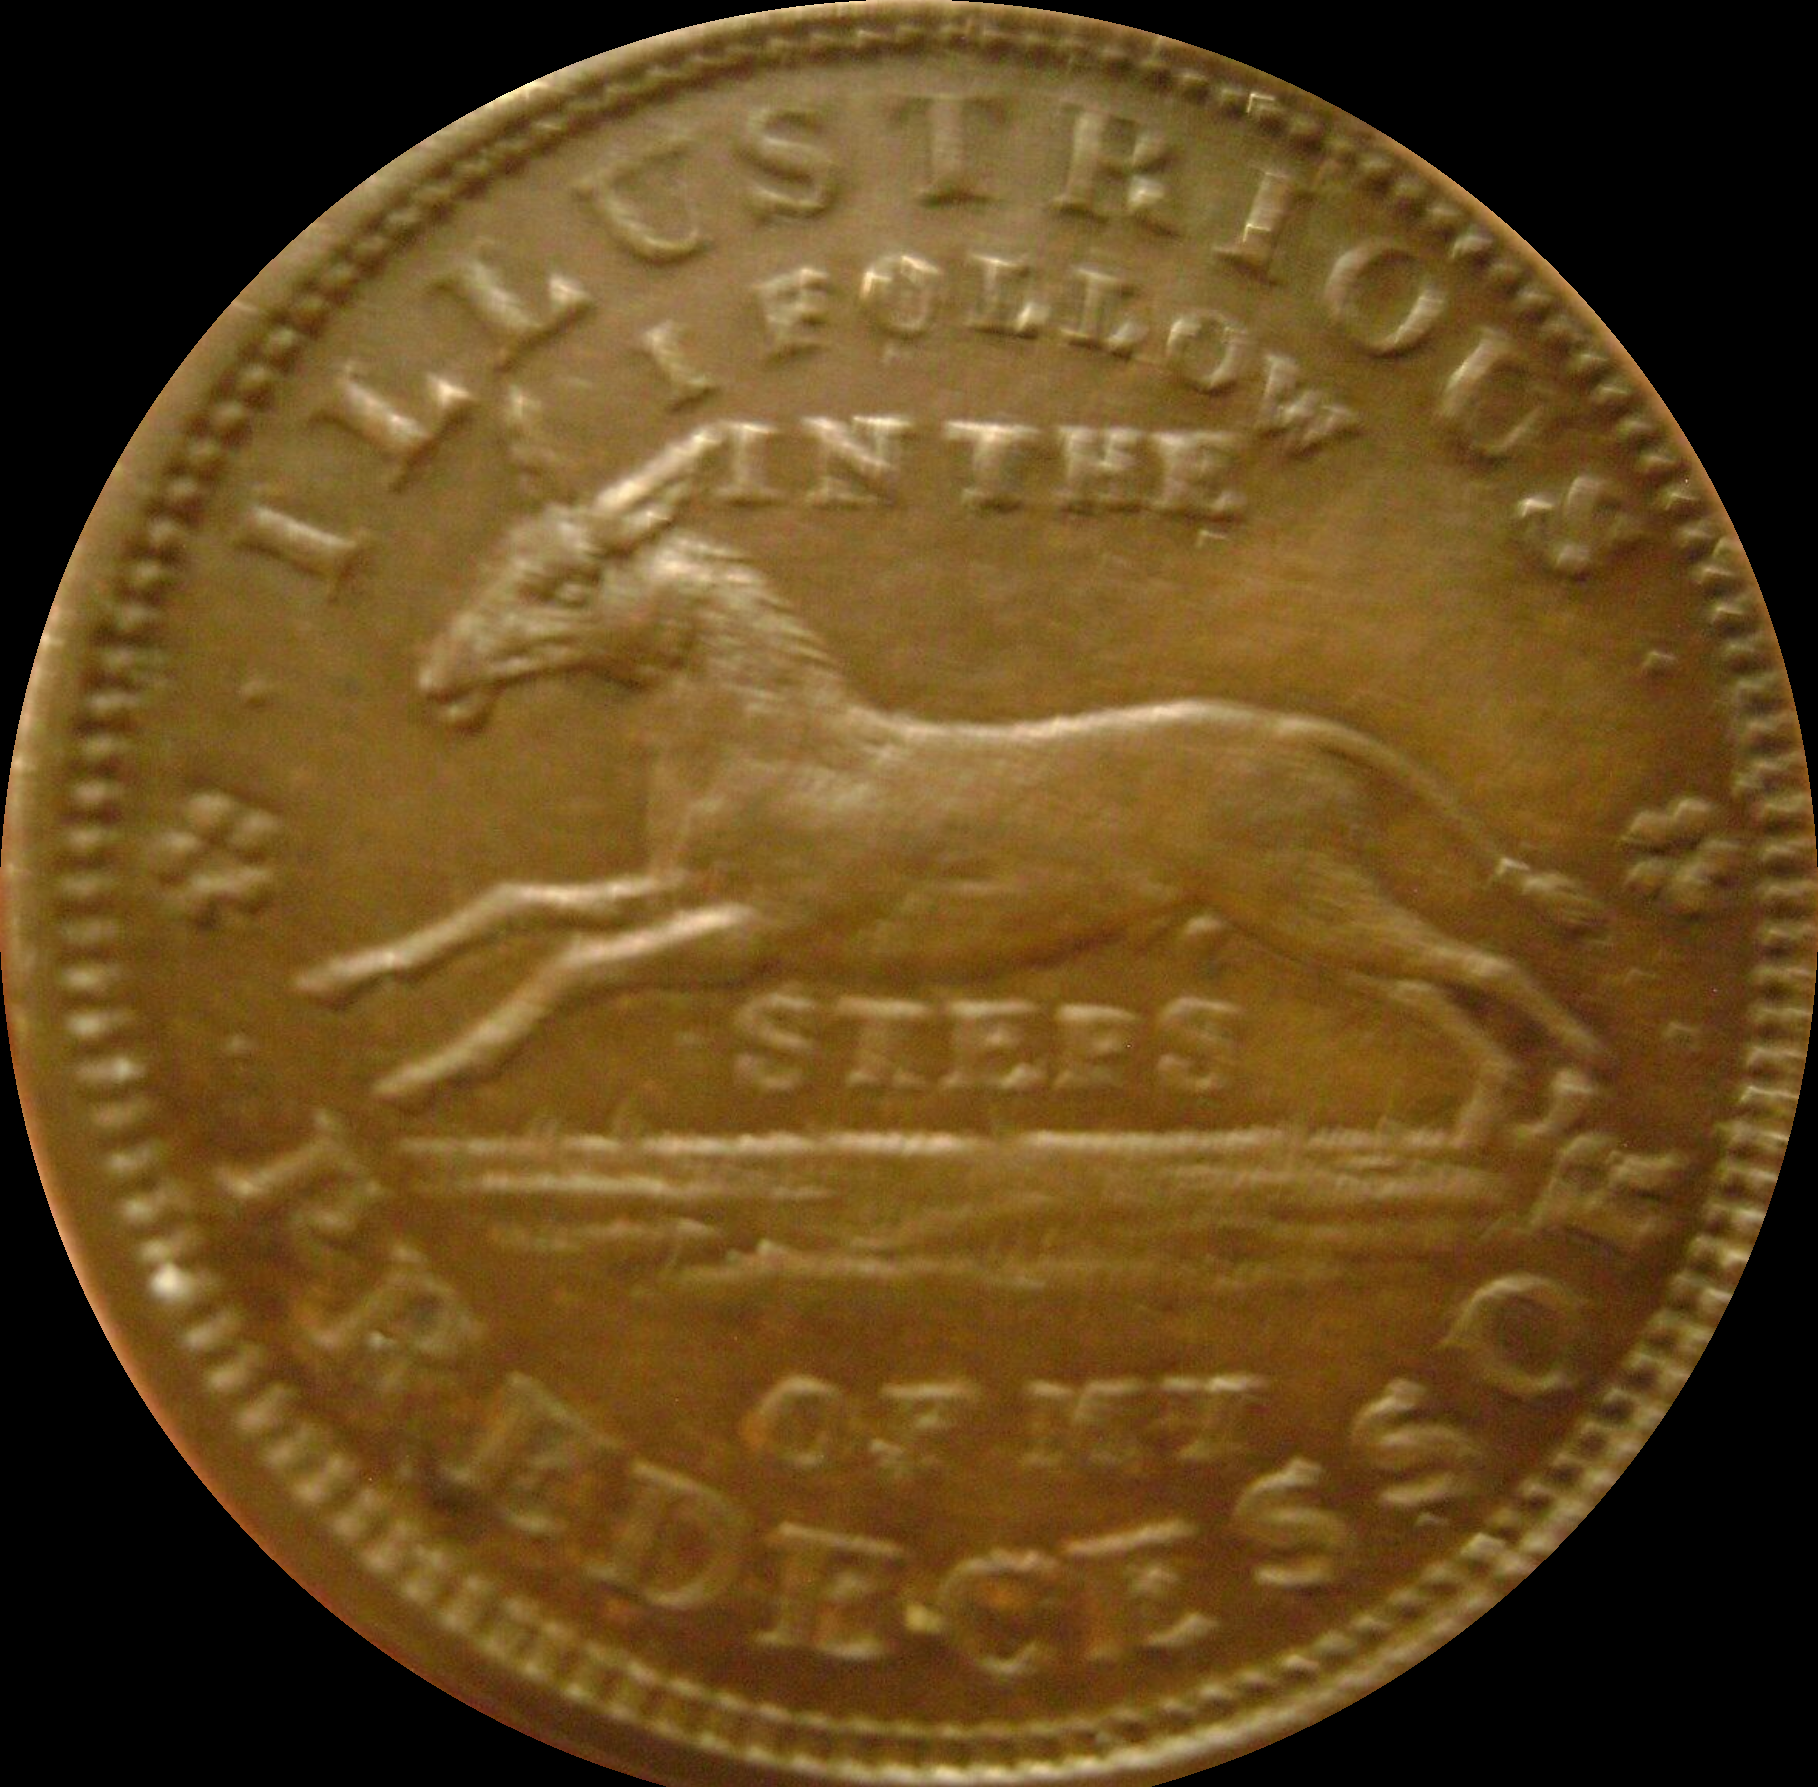 1837 Illustrious Predecessor - HT-33 or HT-A33? | Coin Talk